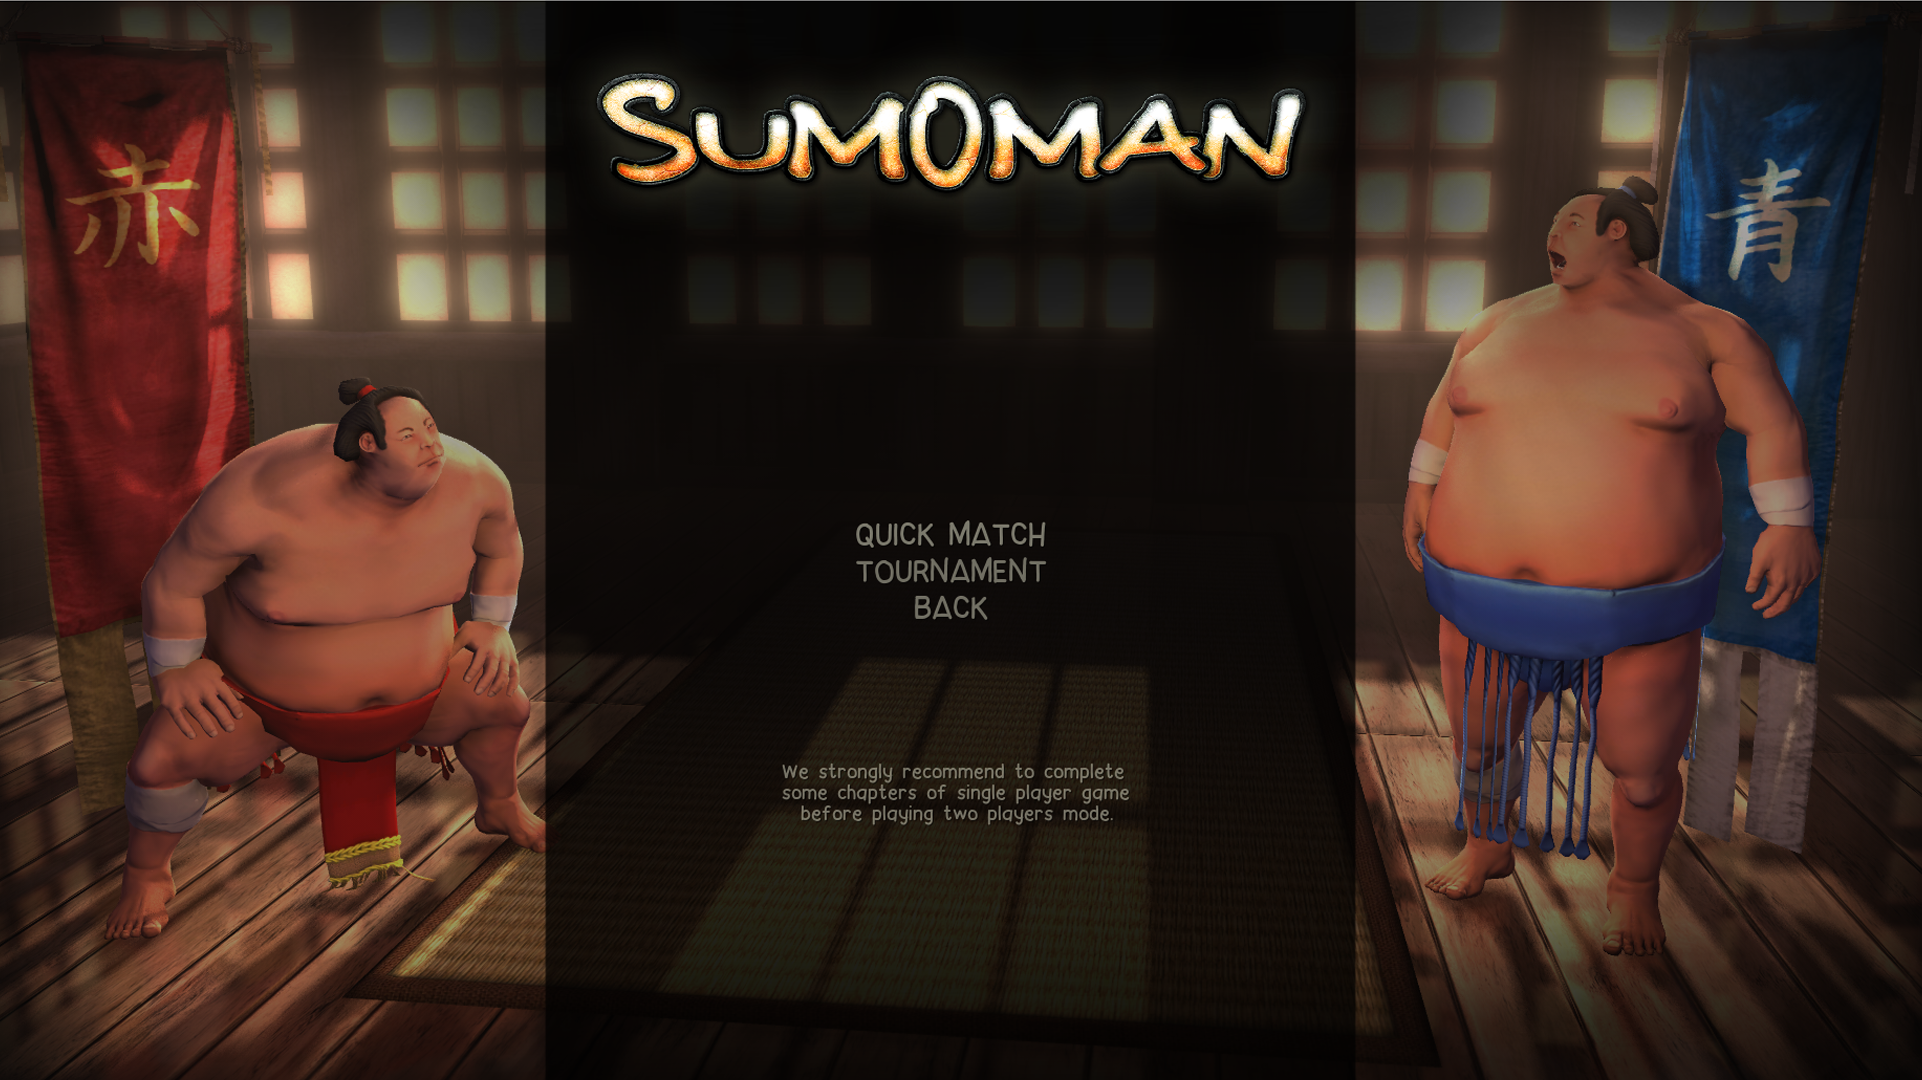 Sumoman 2 players mode news - IndieDB